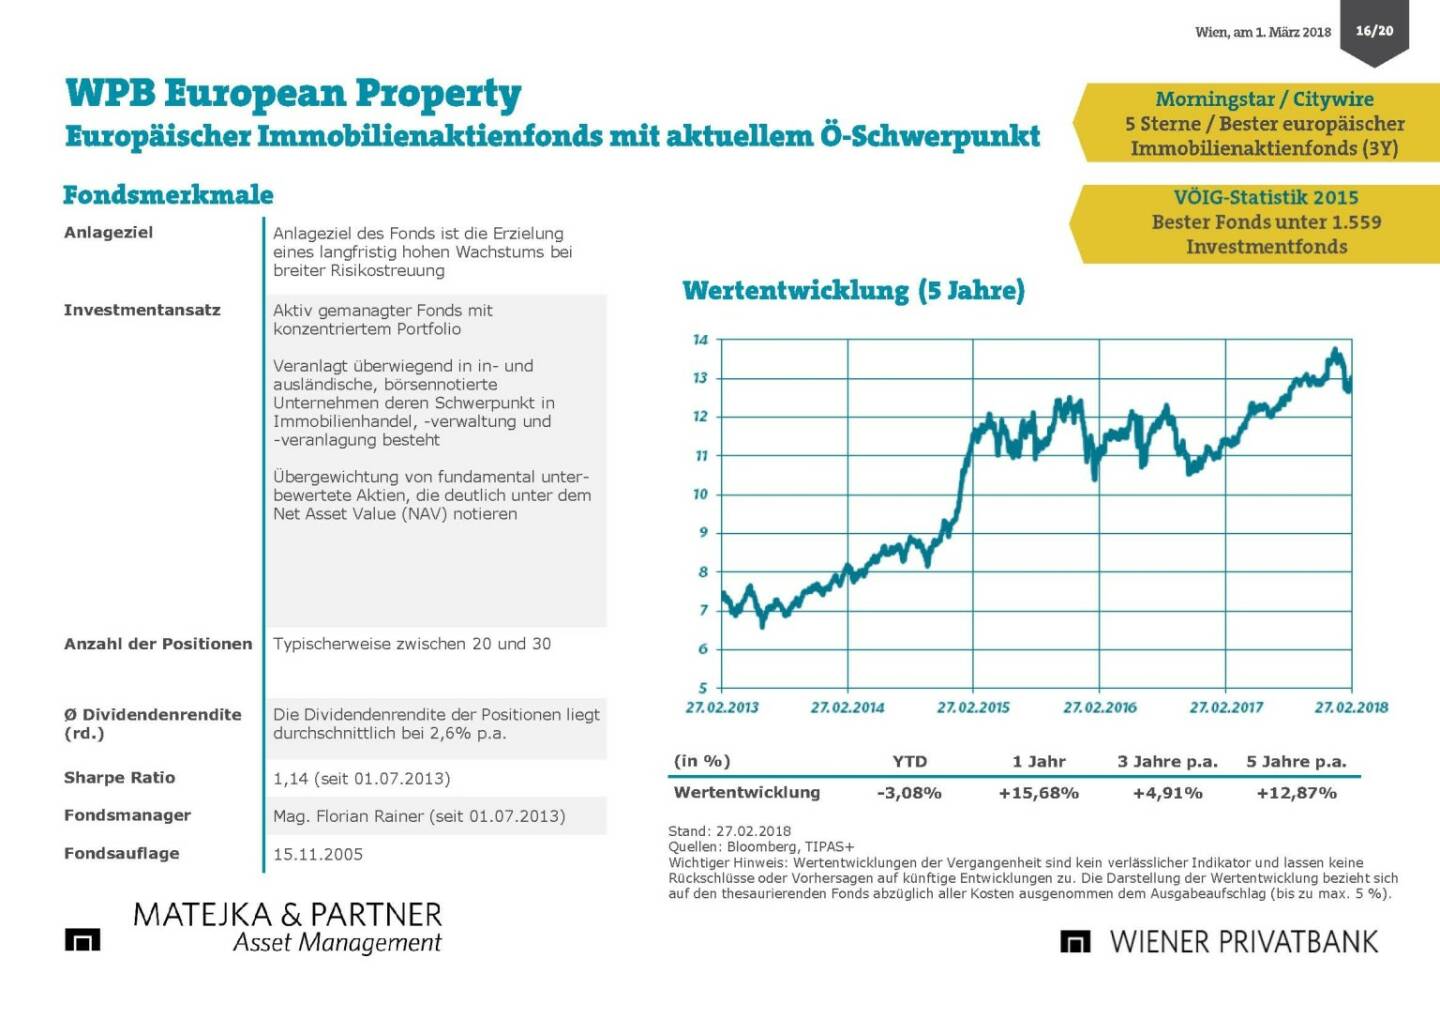 Präsentation Wiener Privatbank - WPB European Property